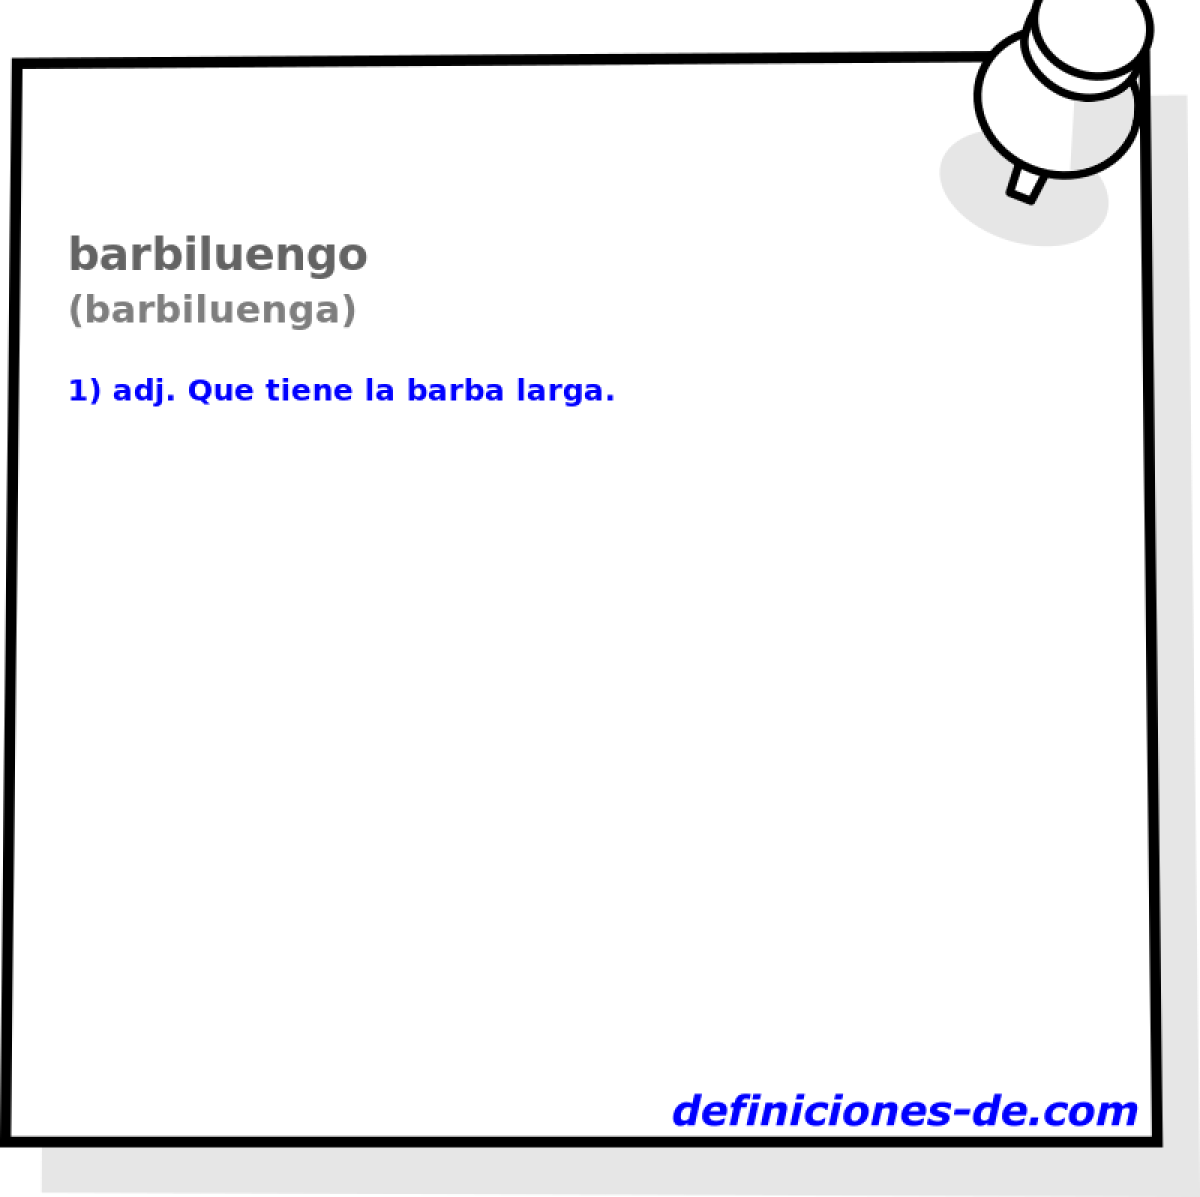 barbiluengo (barbiluenga)